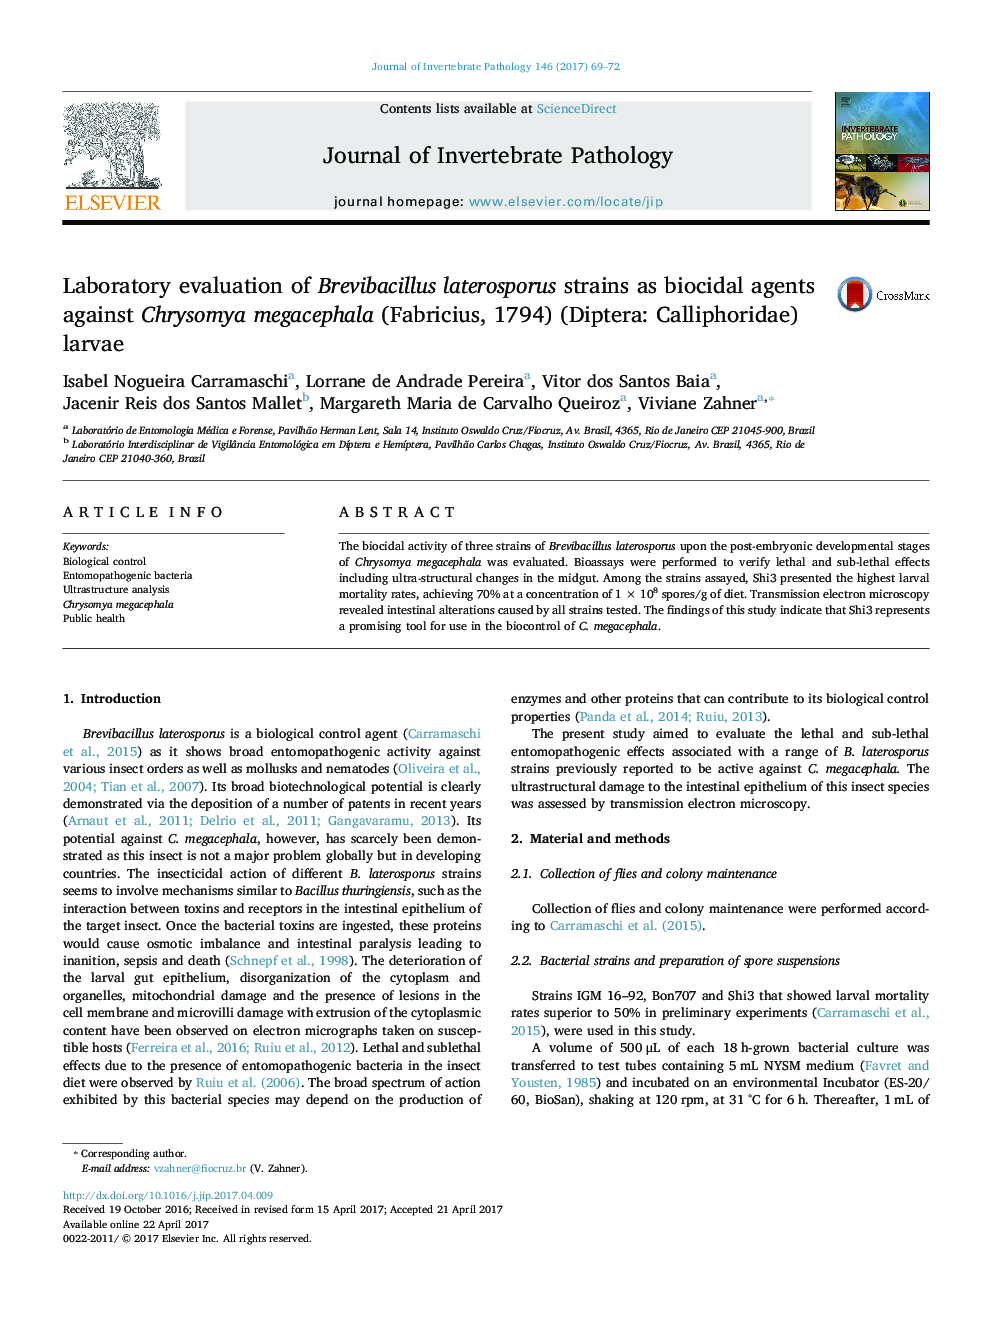 Laboratory evaluation of Brevibacillus laterosporus strains as biocidal agents against Chrysomya megacephala (Fabricius, 1794) (Diptera: Calliphoridae) larvae